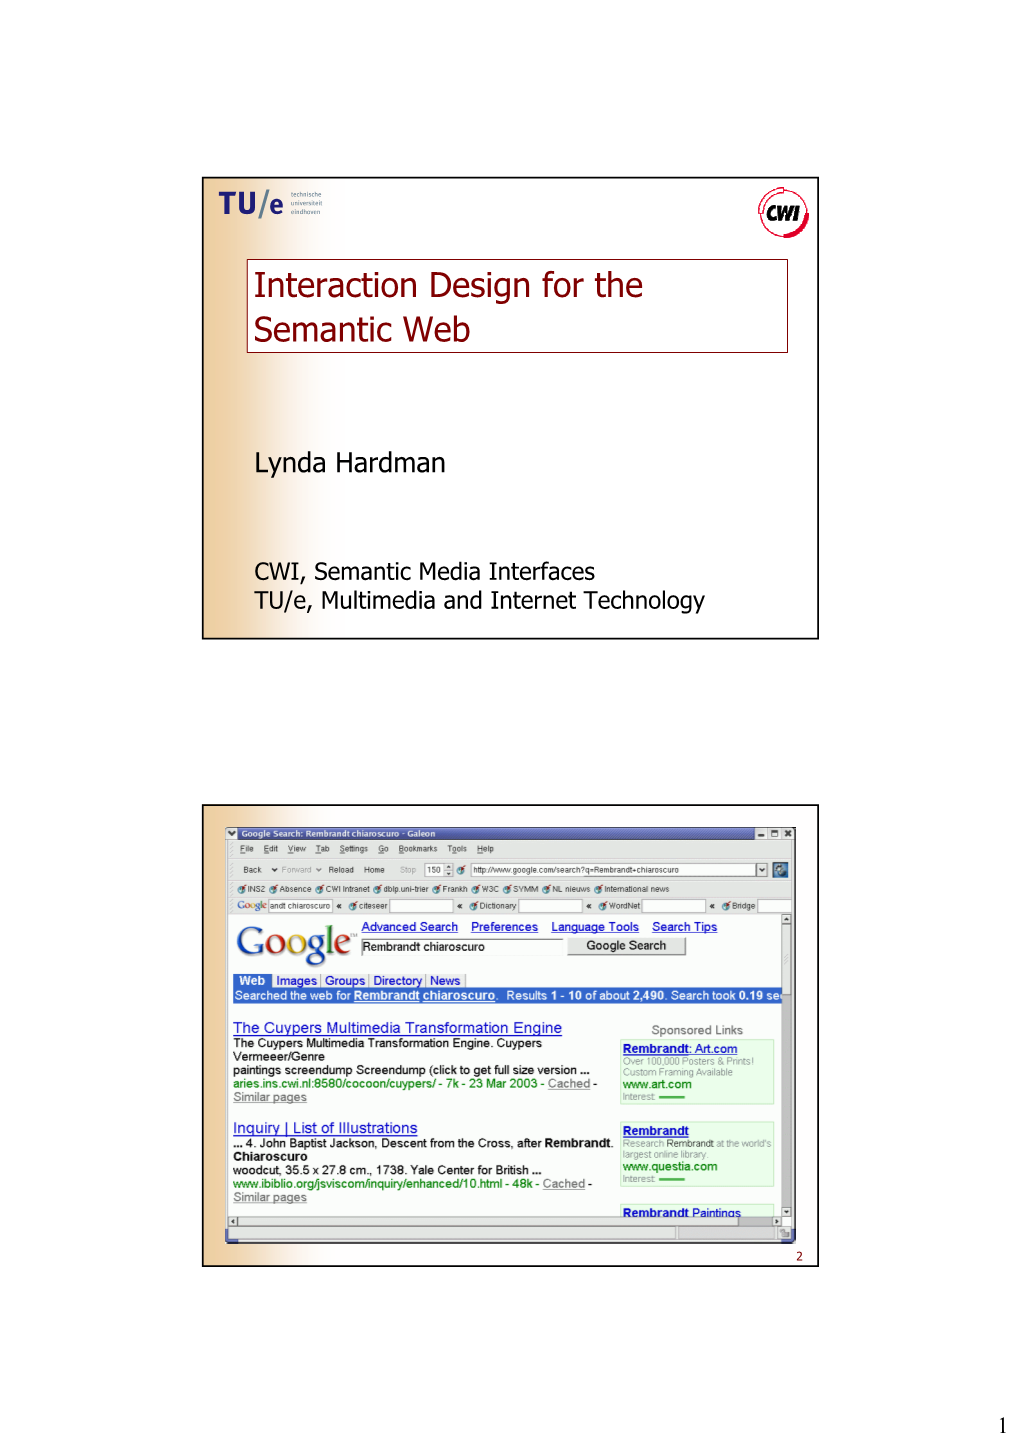 Interaction Design for the Semantic Web Presentation